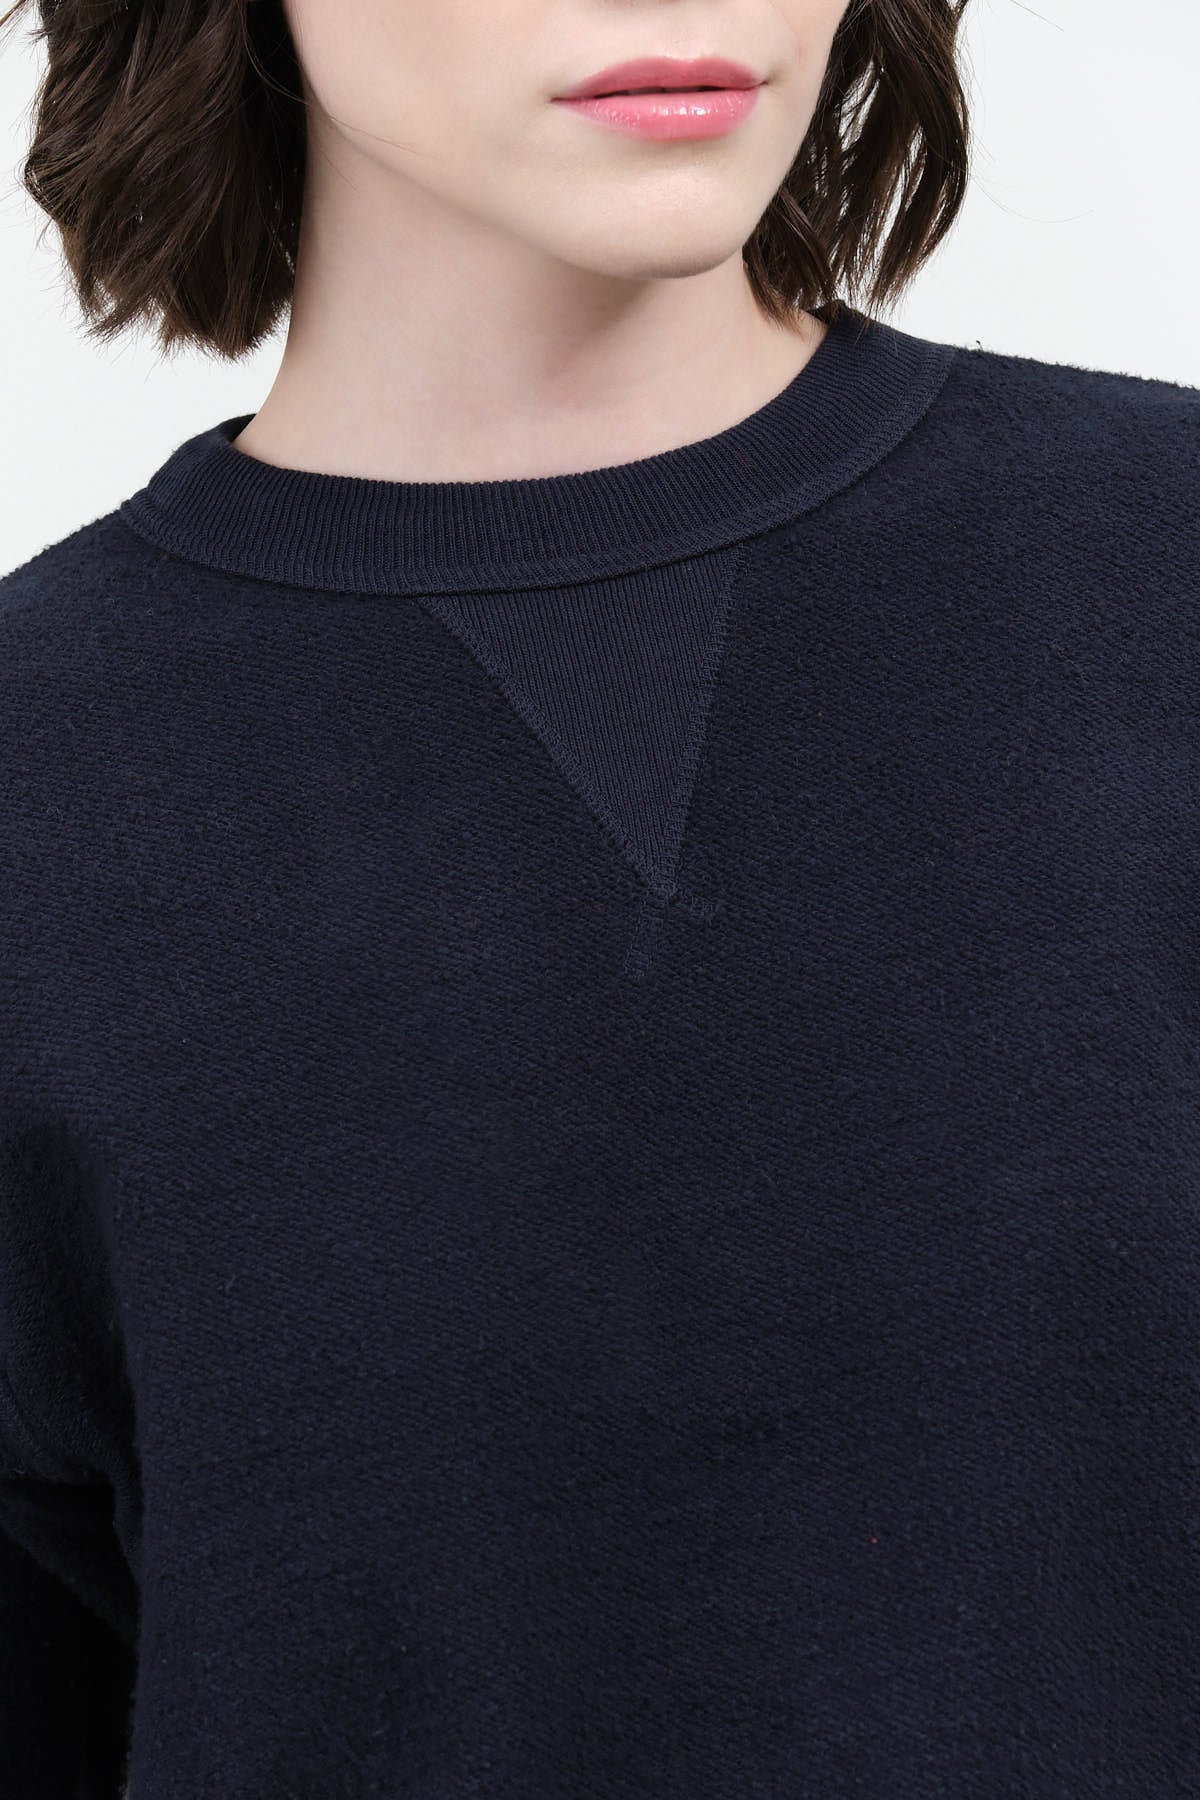 Dark Navy Hina Sweatshirt by Sunray Sportswear